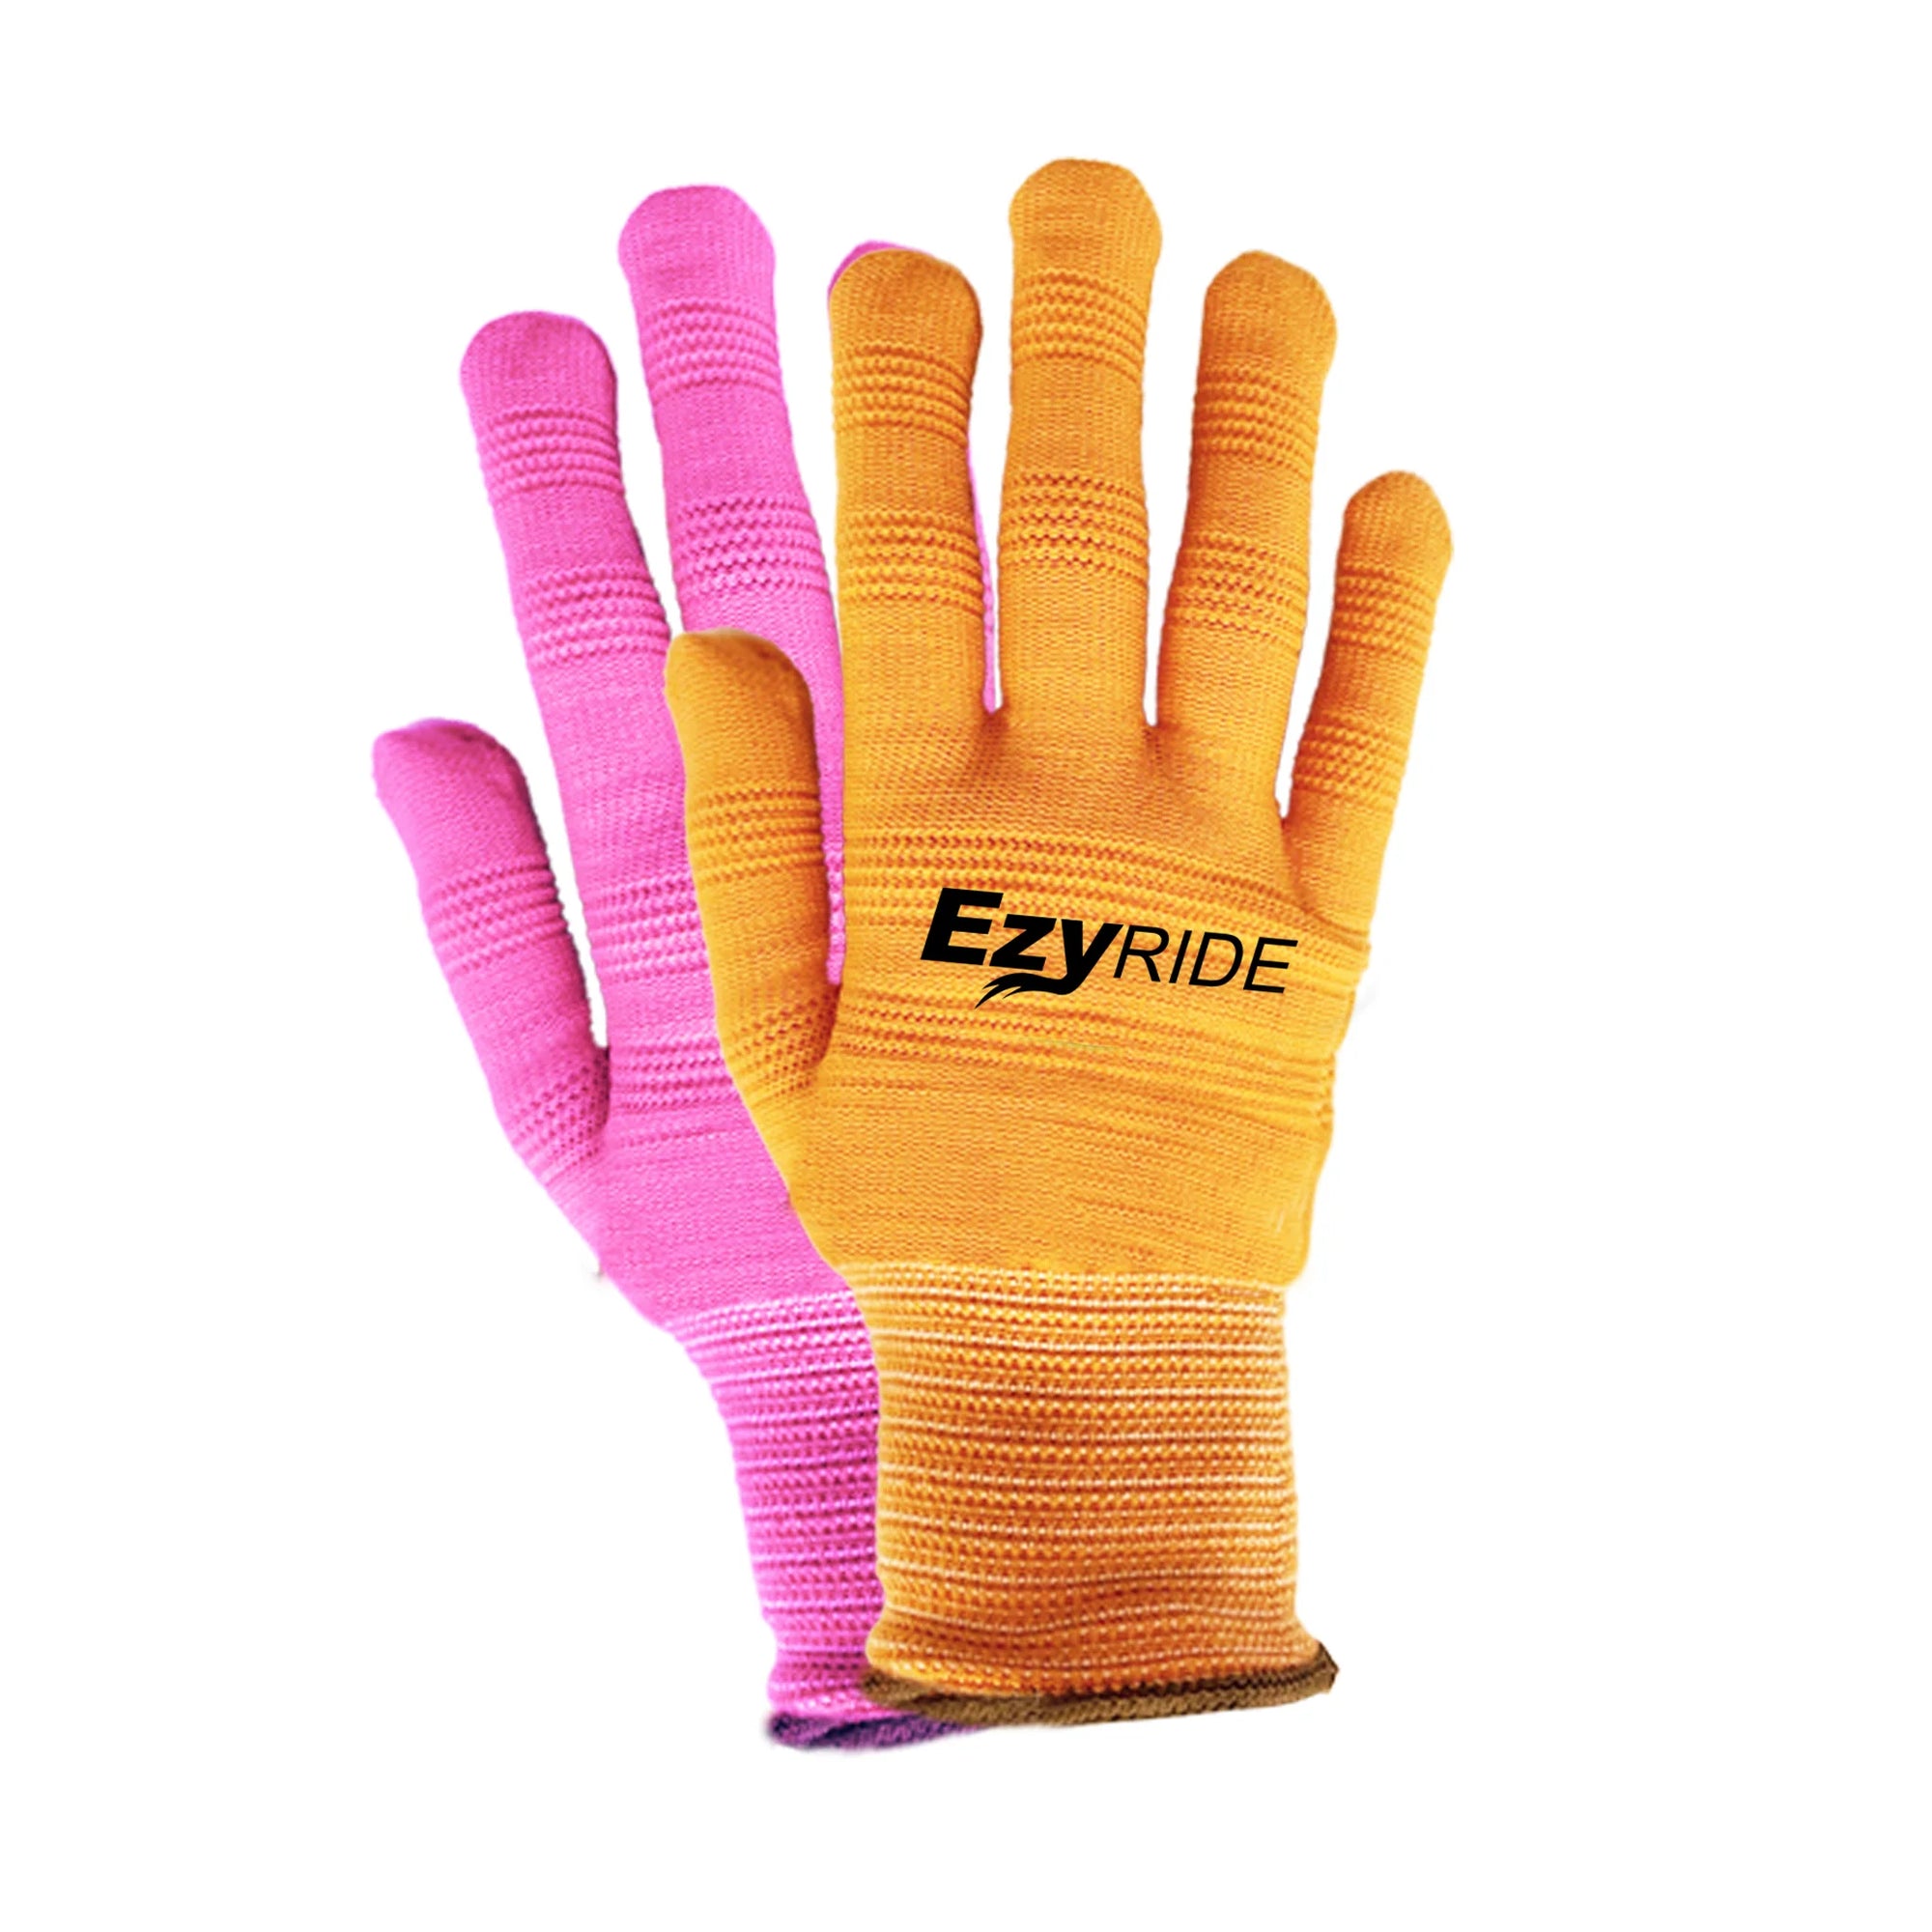 Ezy Ride Roping Glove 10 Pack